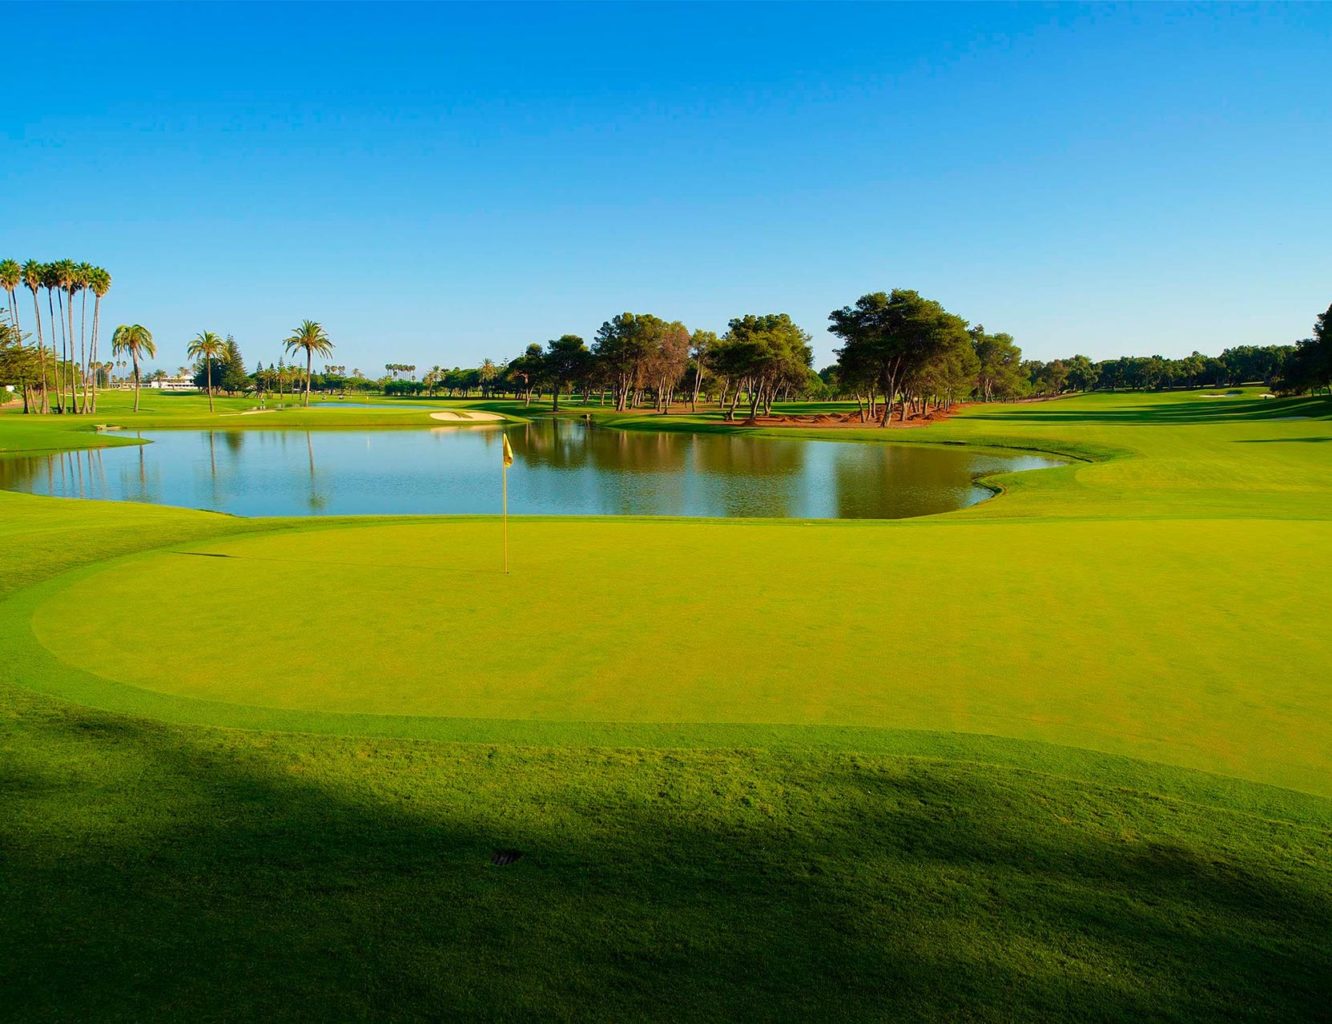 Real Club de Golf Sotogrande golf in spain